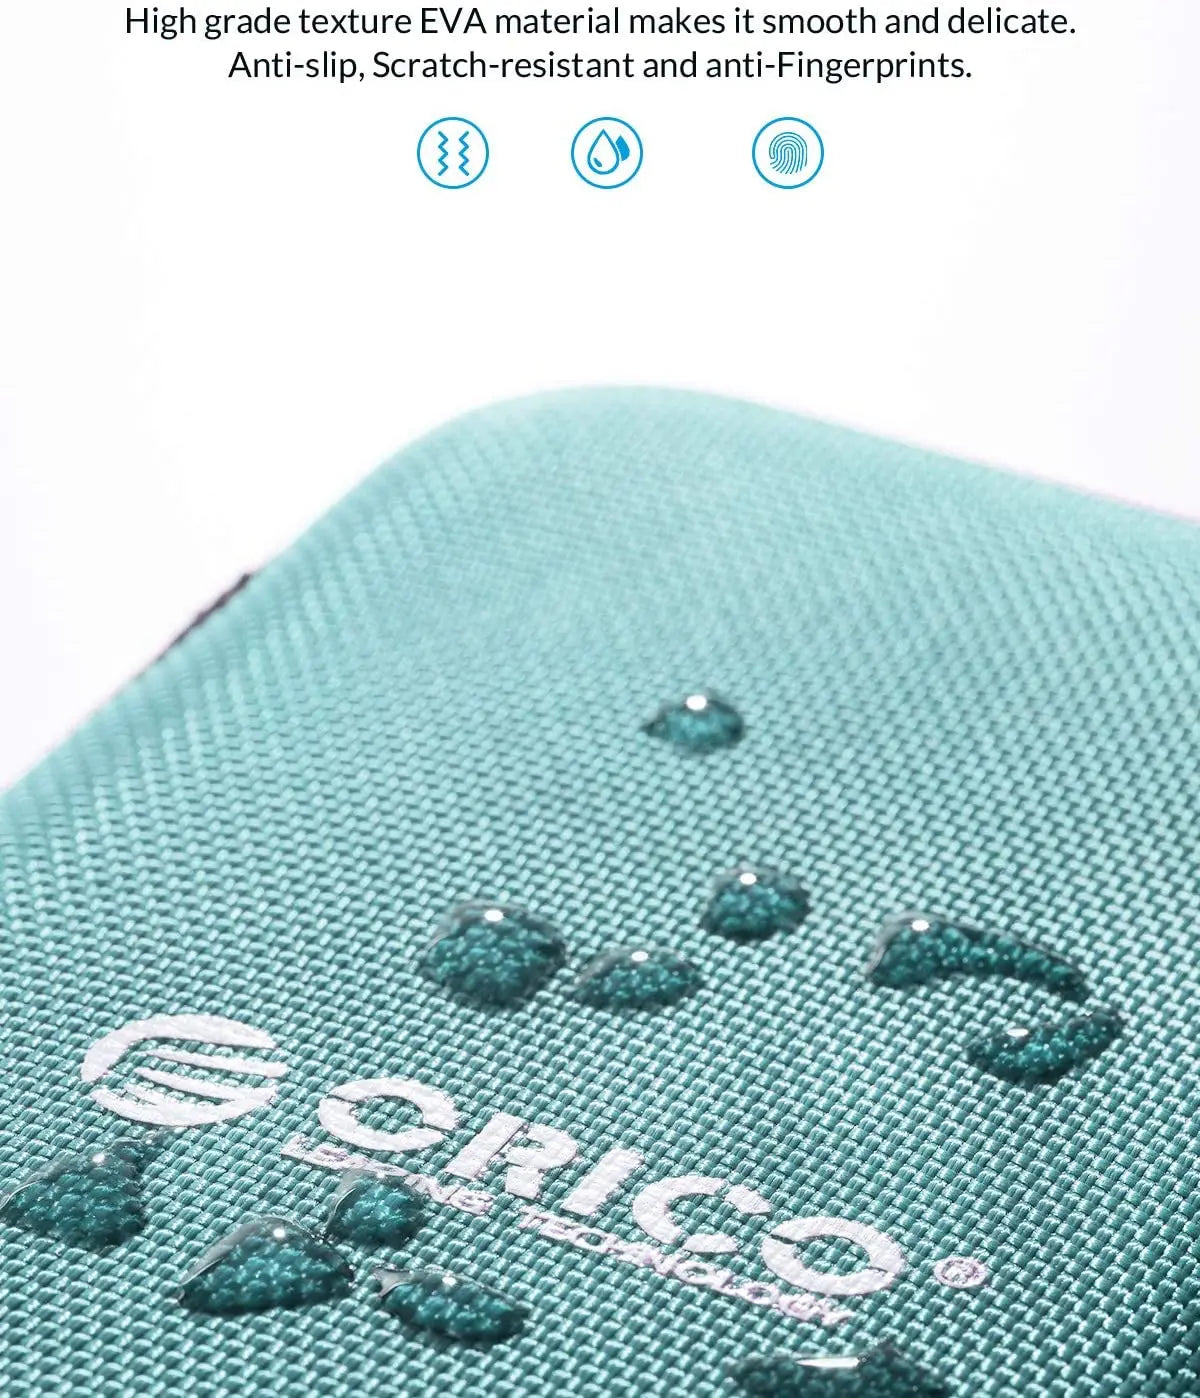 ORICO 2.5" Waterproof Shockproof Hard Drive Case Orico